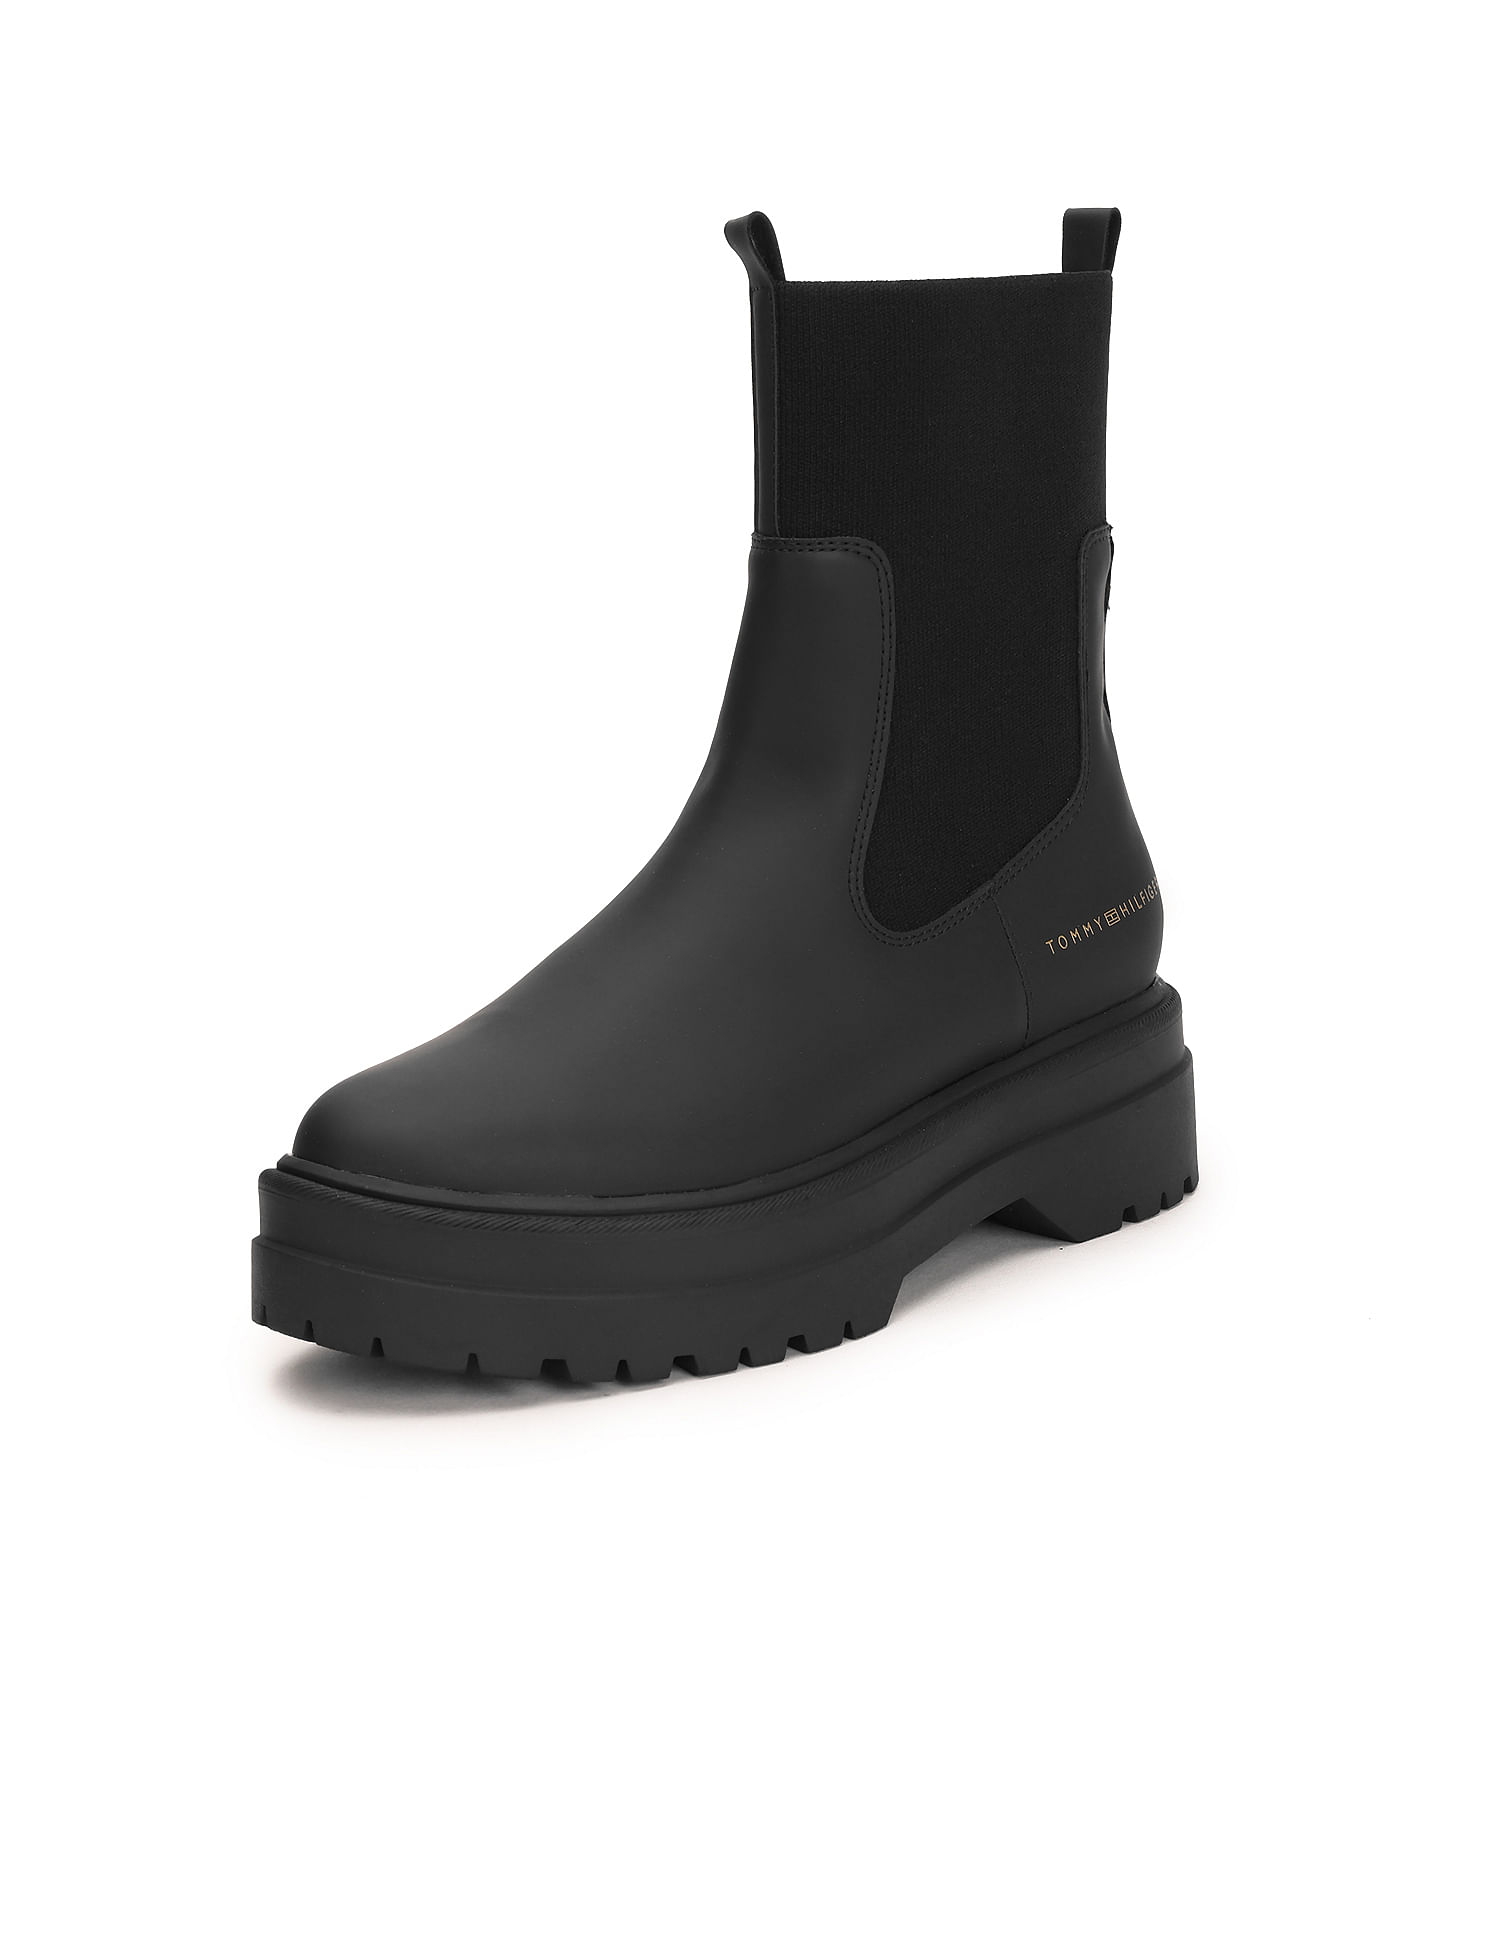 Trary Womens N37F Boots Black Size 10.0 レディース 超激安 - その他